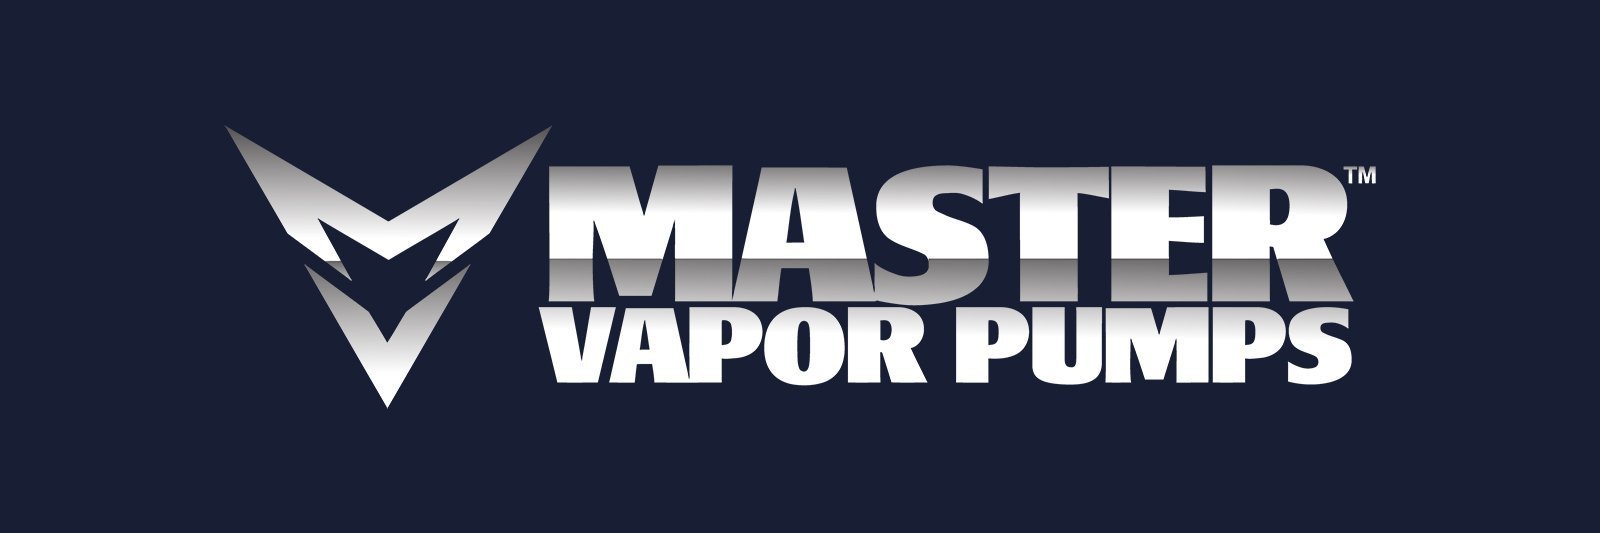 Master Vapor Pumps, Pump Part - MVP - Liquid - Center Section